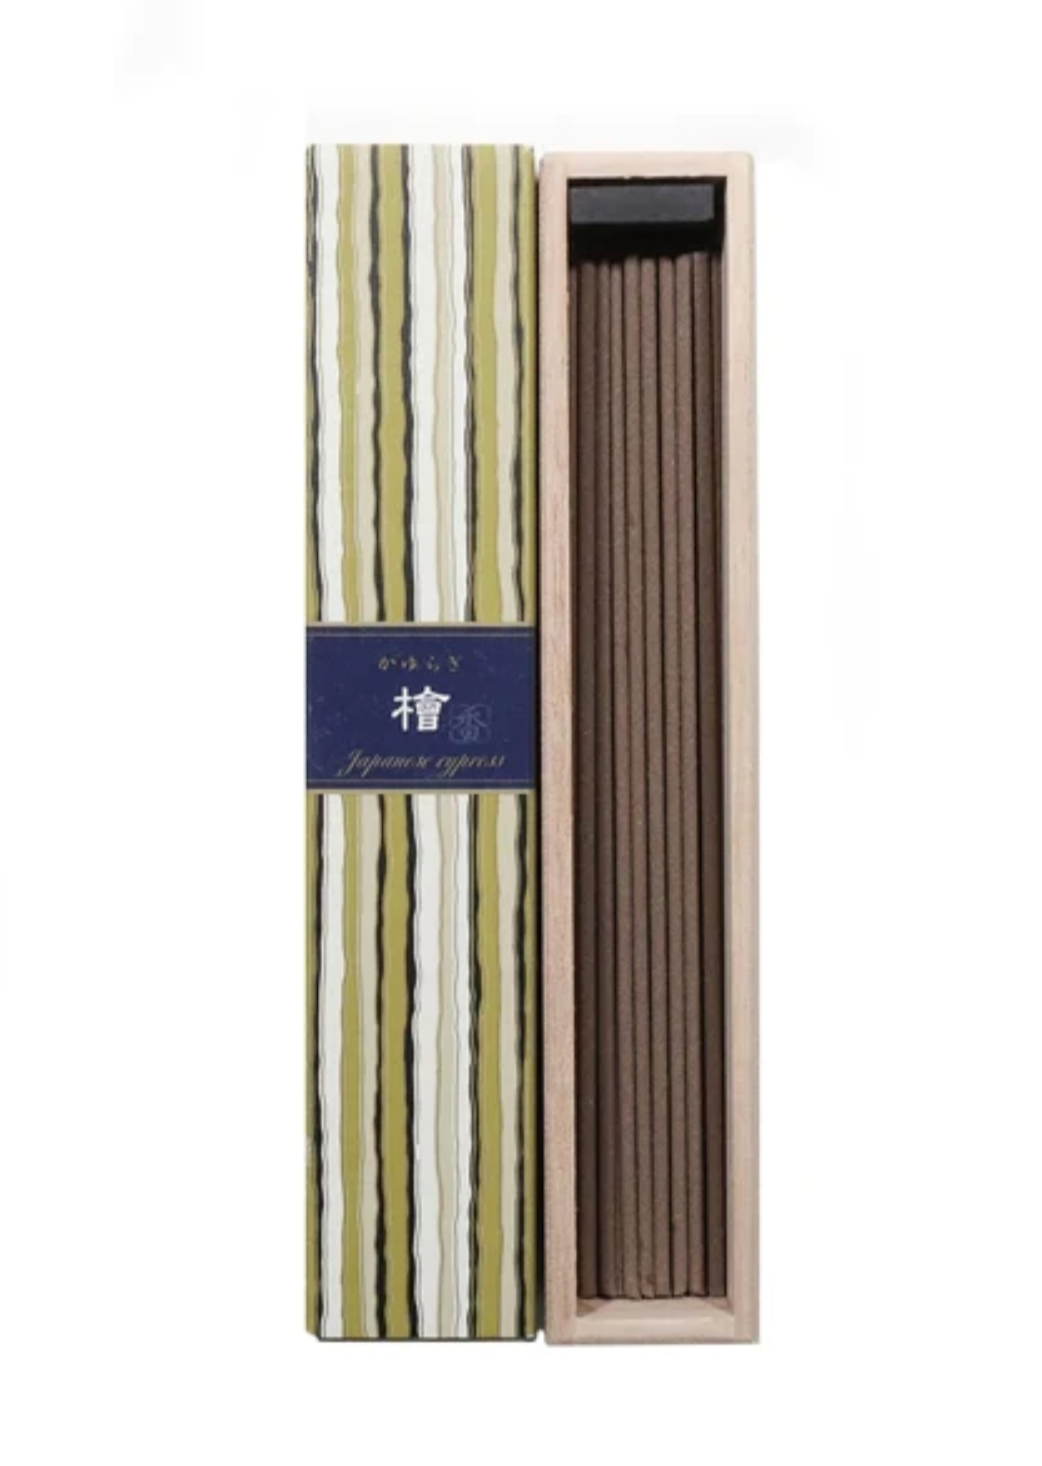 Japanese Cypress - 40 sticks